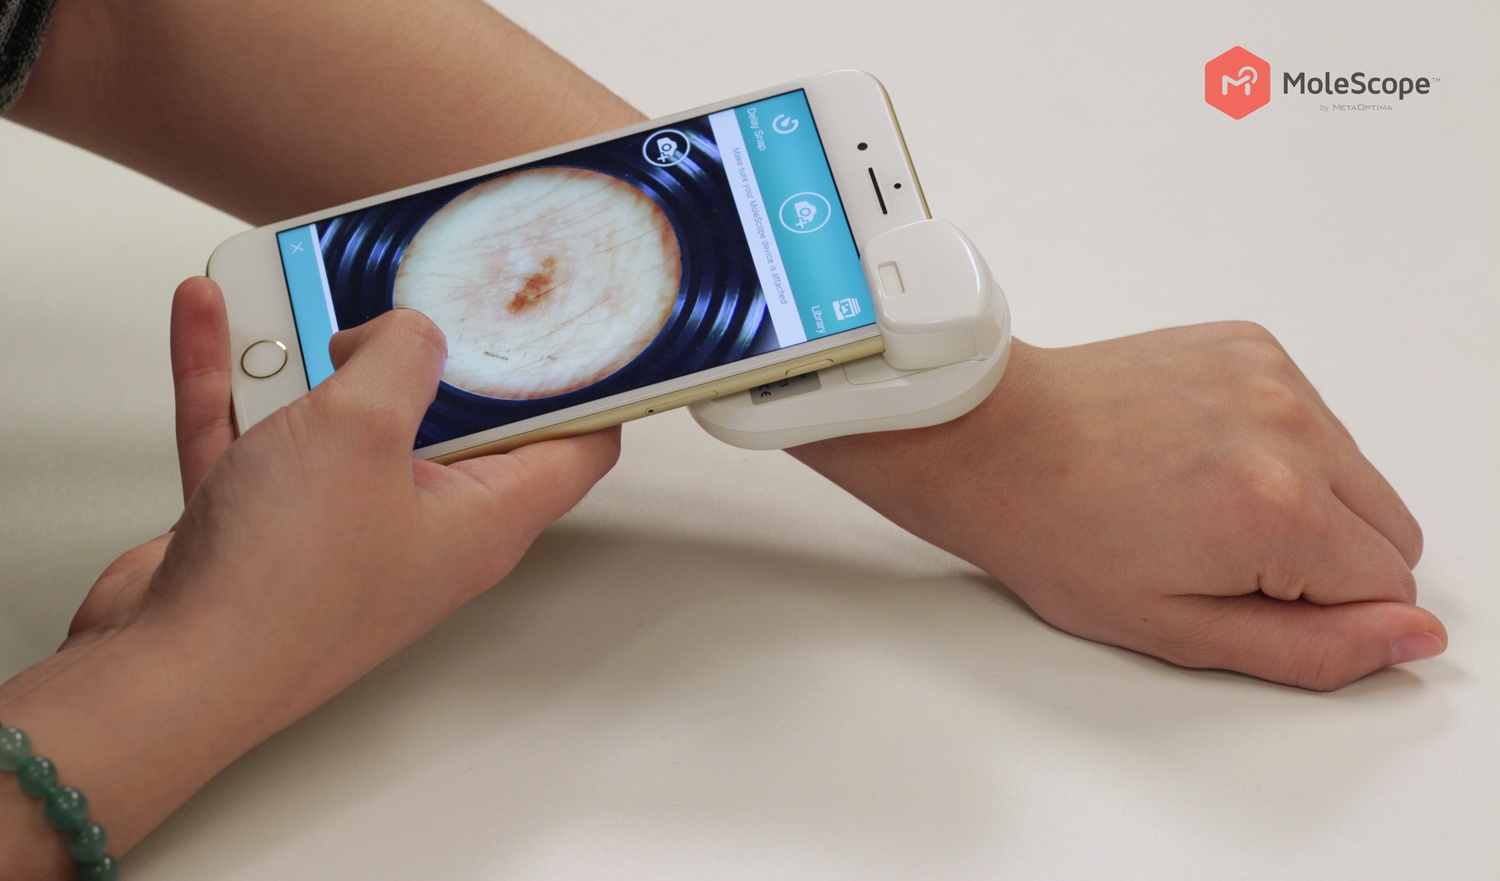 MoleScope Skin Cancer App And Device for Digital Dermoscopy